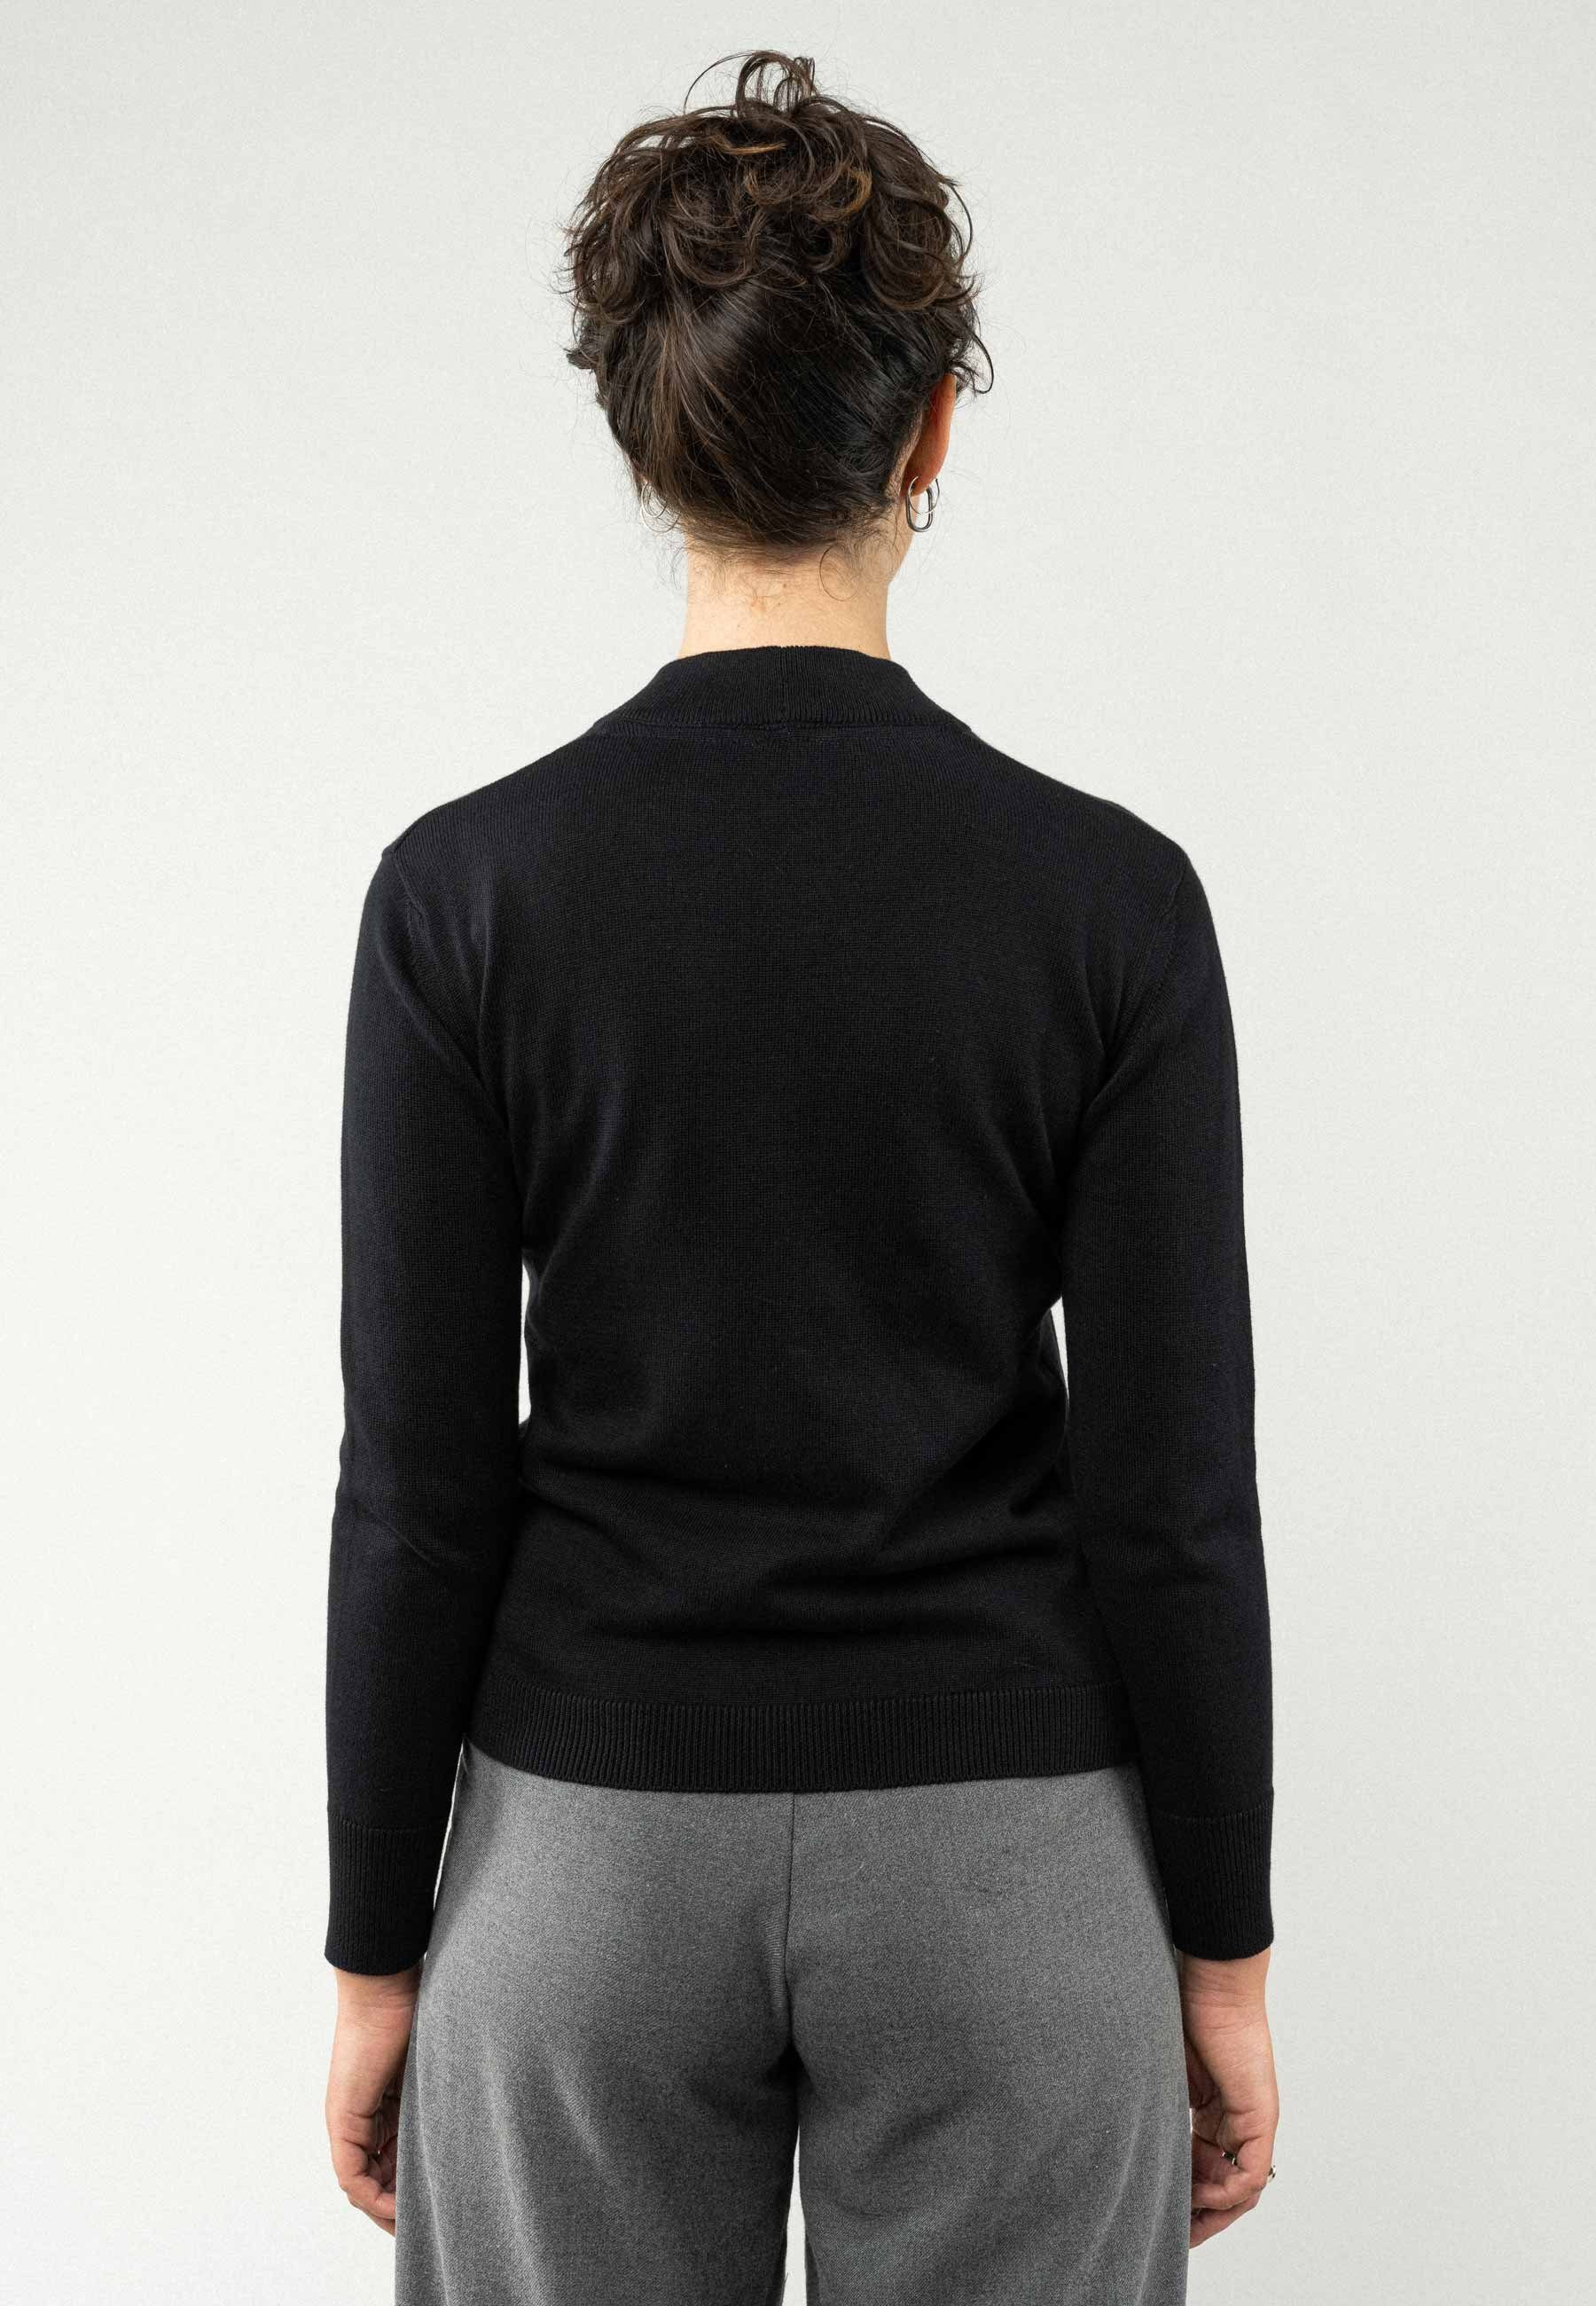 MELA Damen schwarz Rippbündchen Feinstrick-Pullover SADA Strickpullover